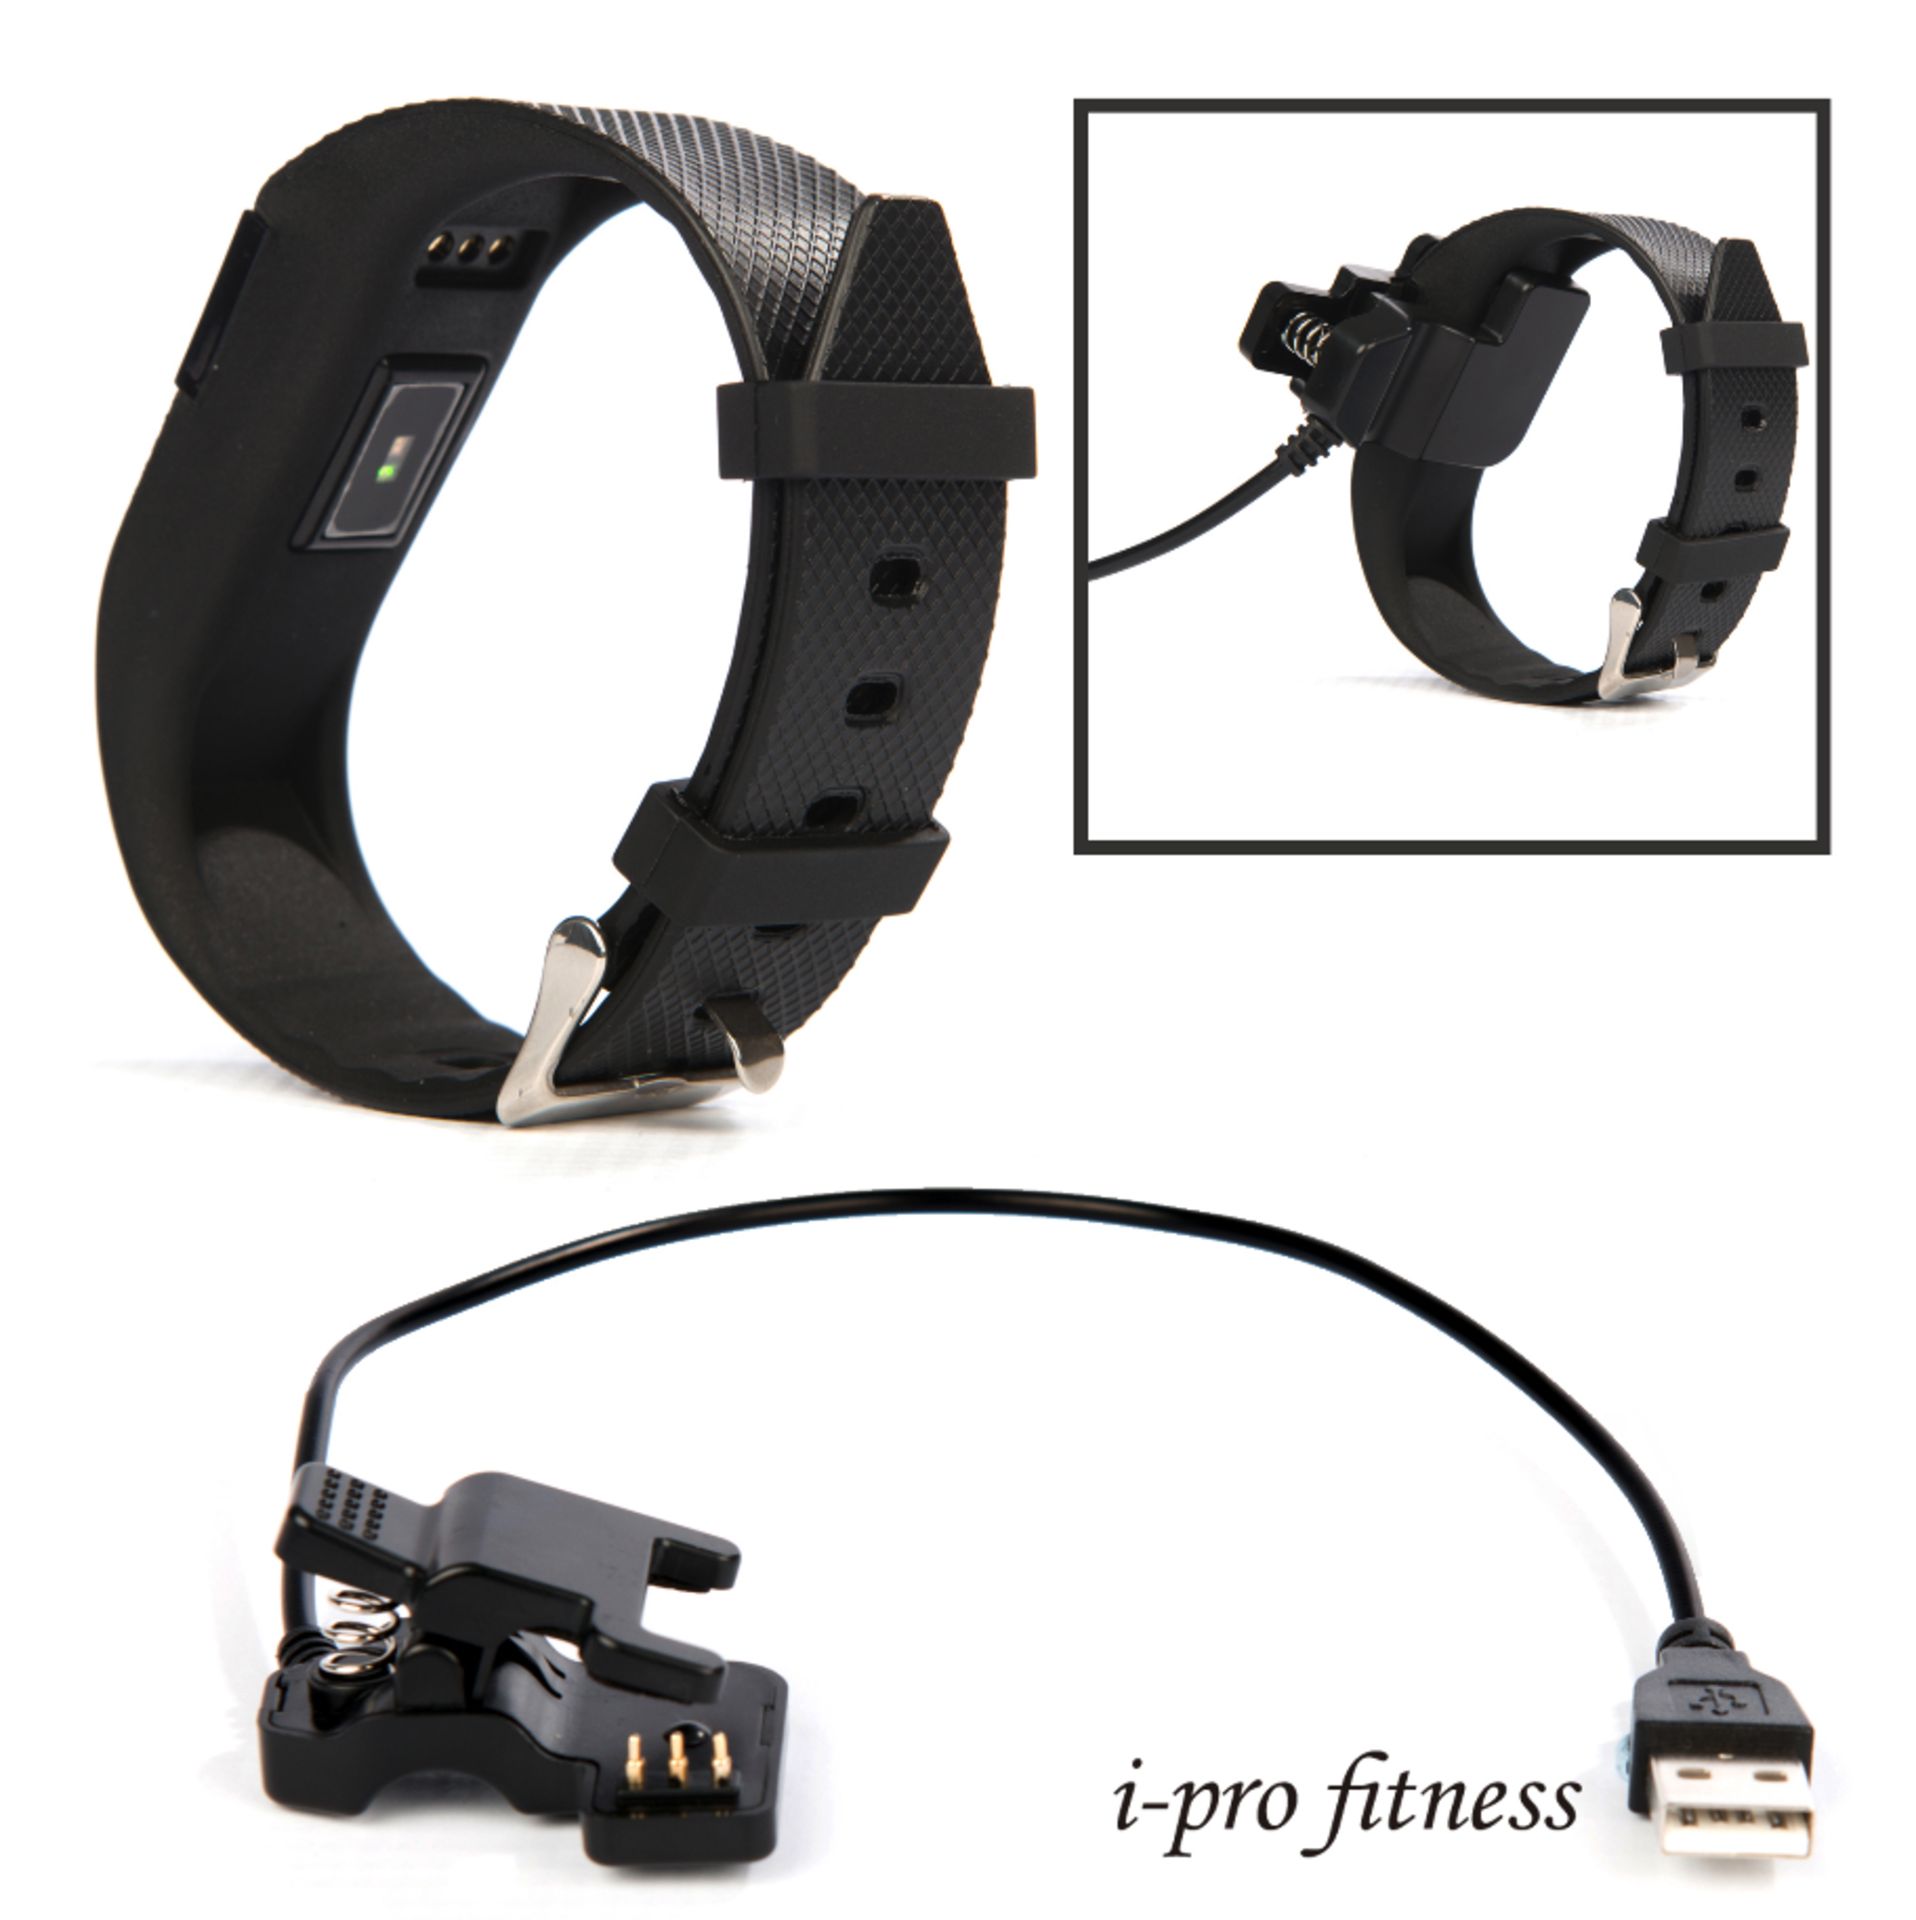 ***Trade lot 50 x Units Fitness Tracker i-pro fitness, Bluetooth 4.0 Sports Smart Bracelet*** - Image 4 of 8